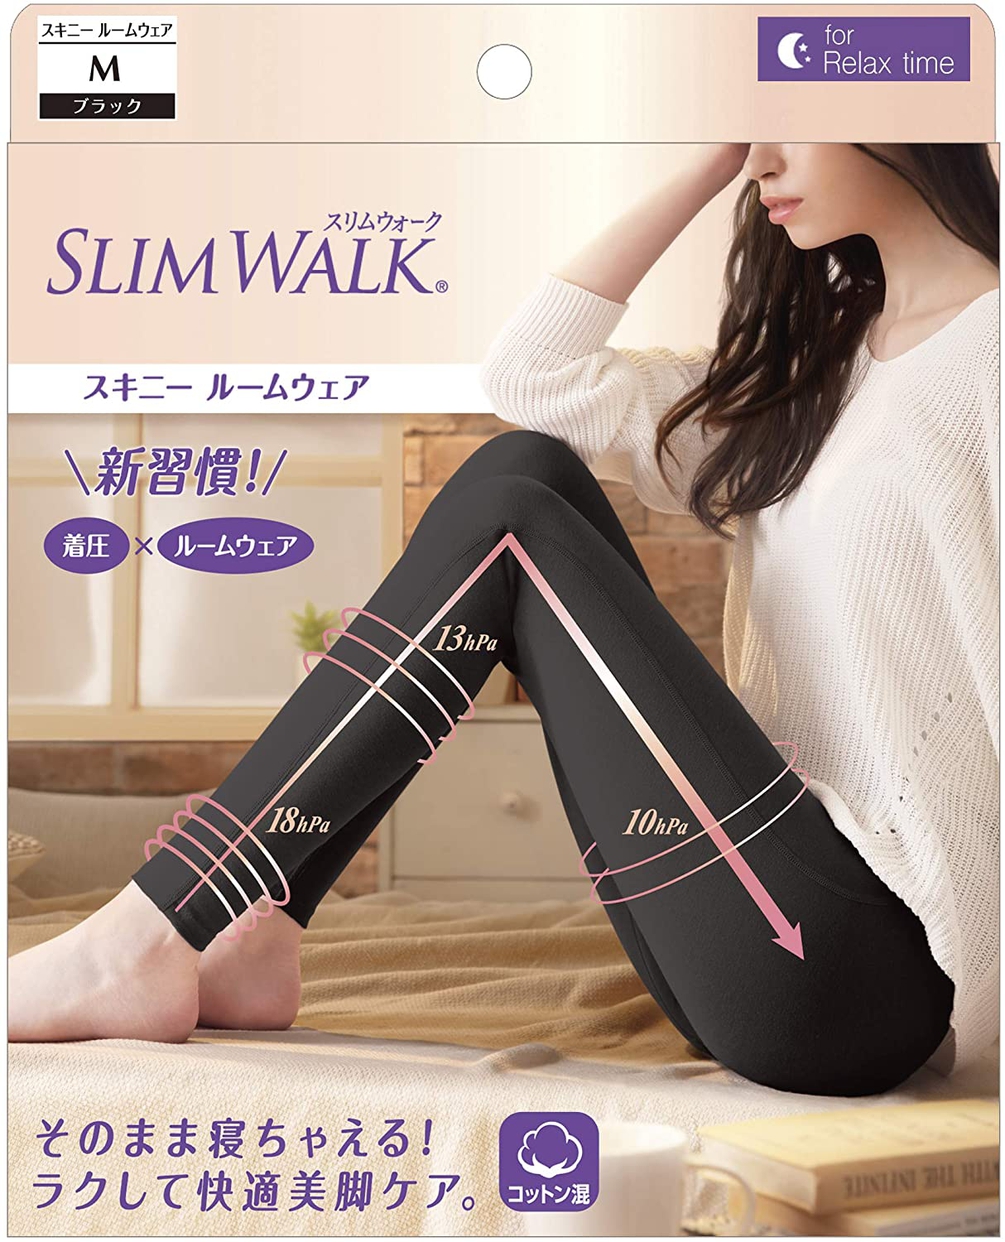 SLIMWALK(スリムウォーク) スキニールームウェアの商品画像1 